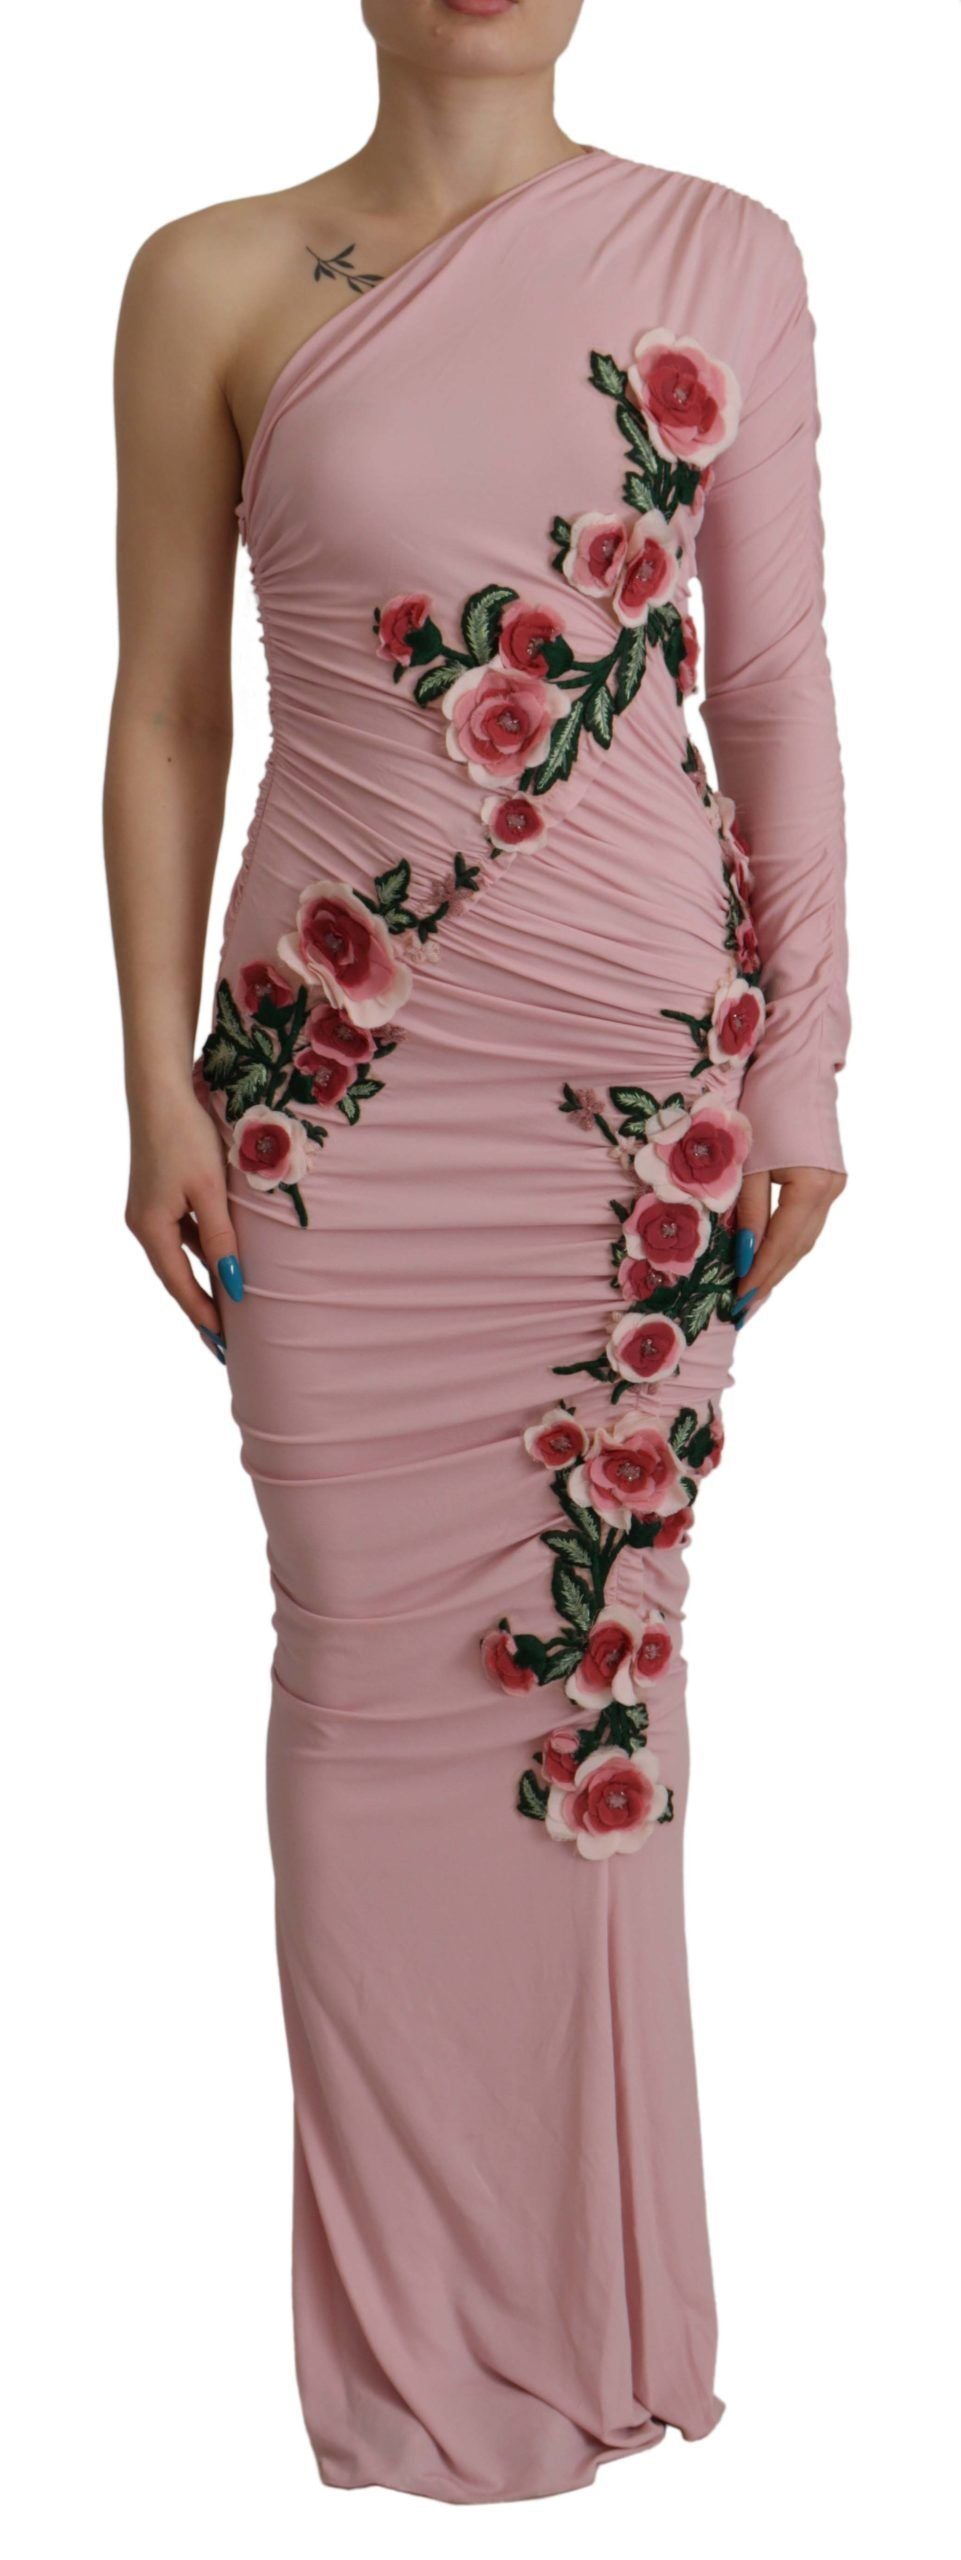 Elegant Pink One Shoulder Bodycon Dress